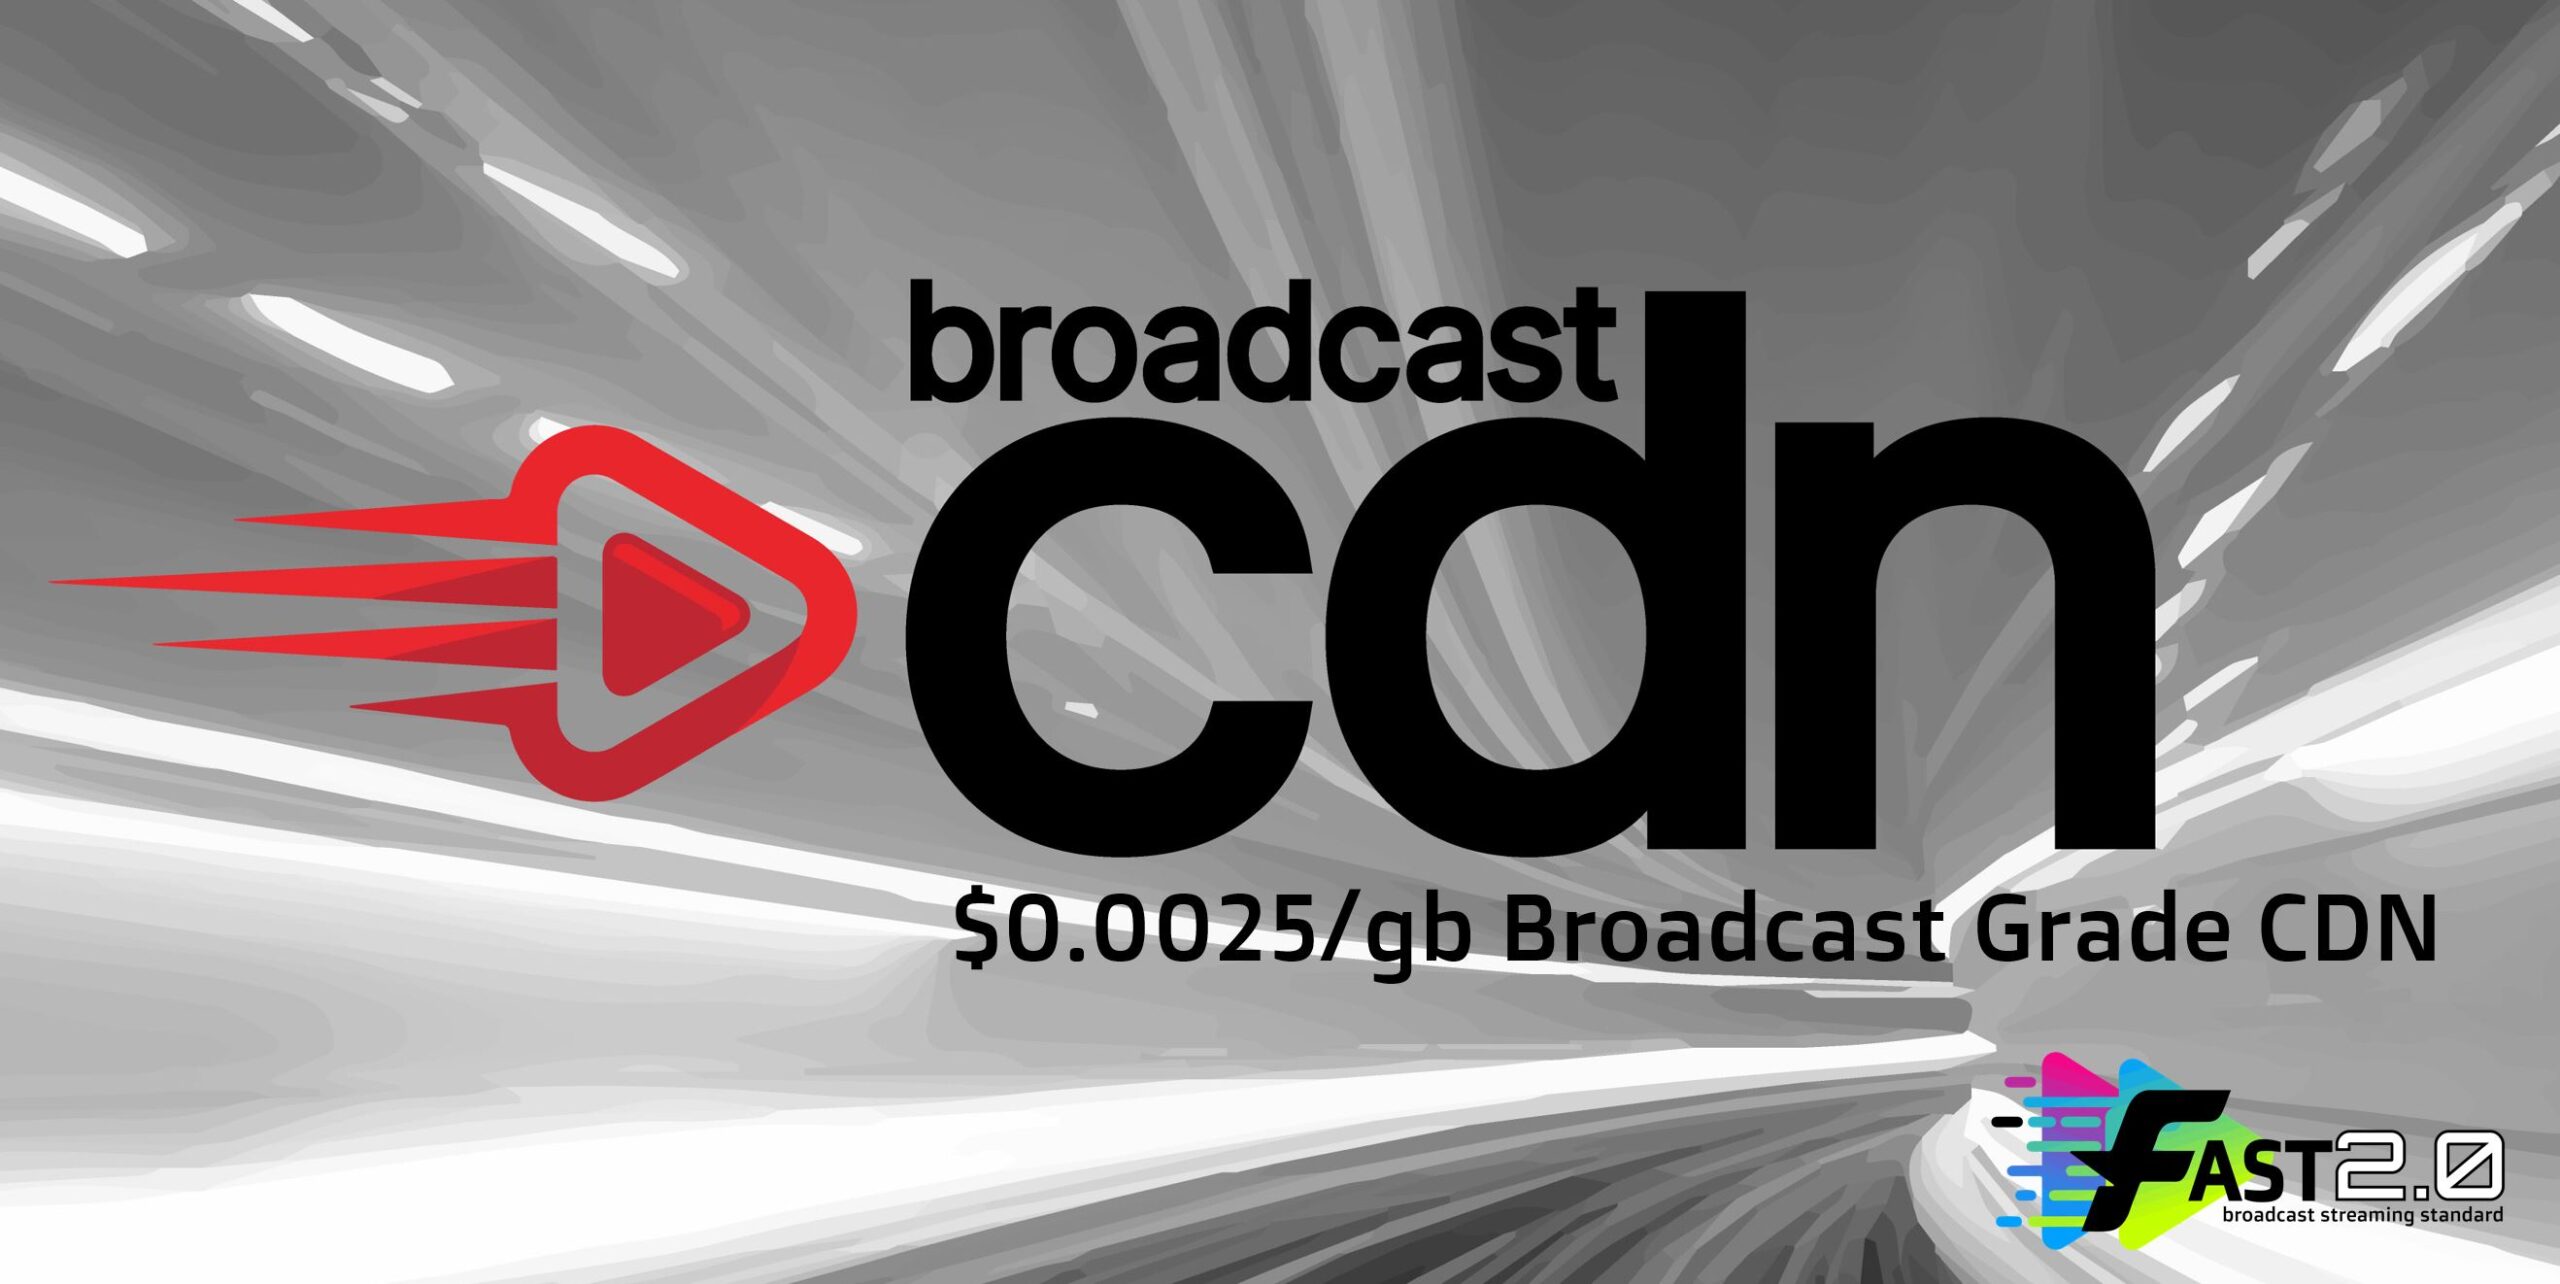 BroadcastCDN Released